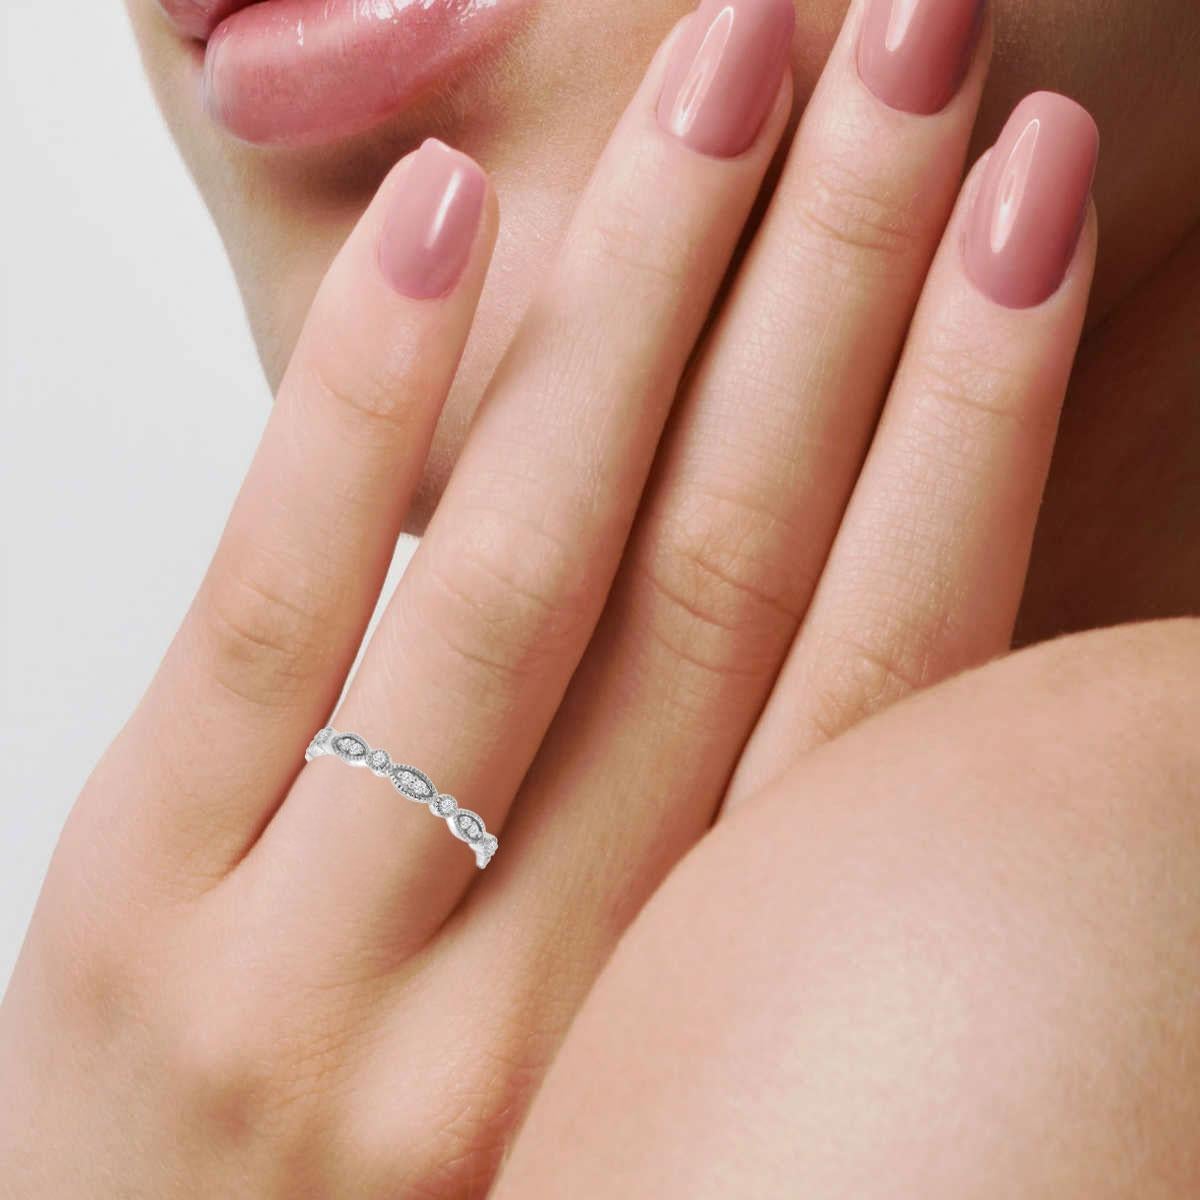 10 carat marquise diamond ring